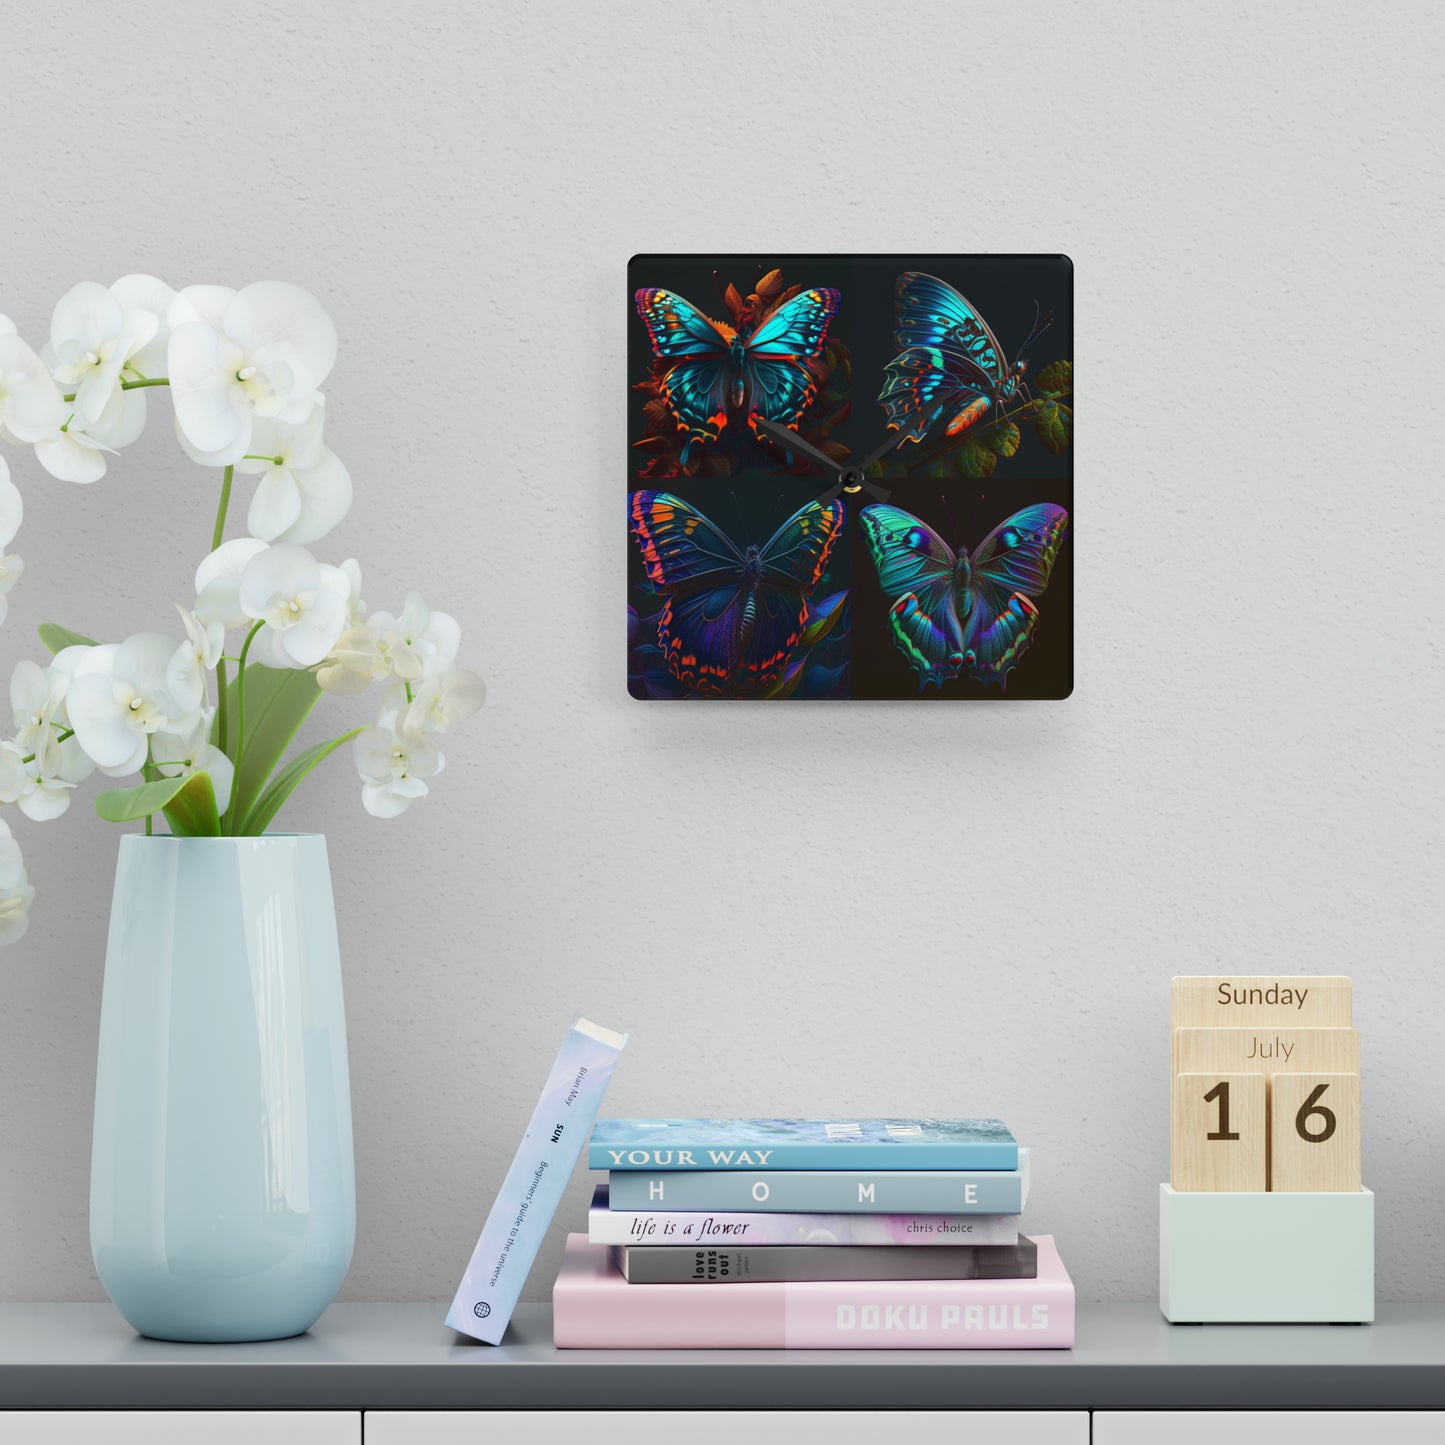 Acrylic Wall Clock Hue Neon Butterfly 5